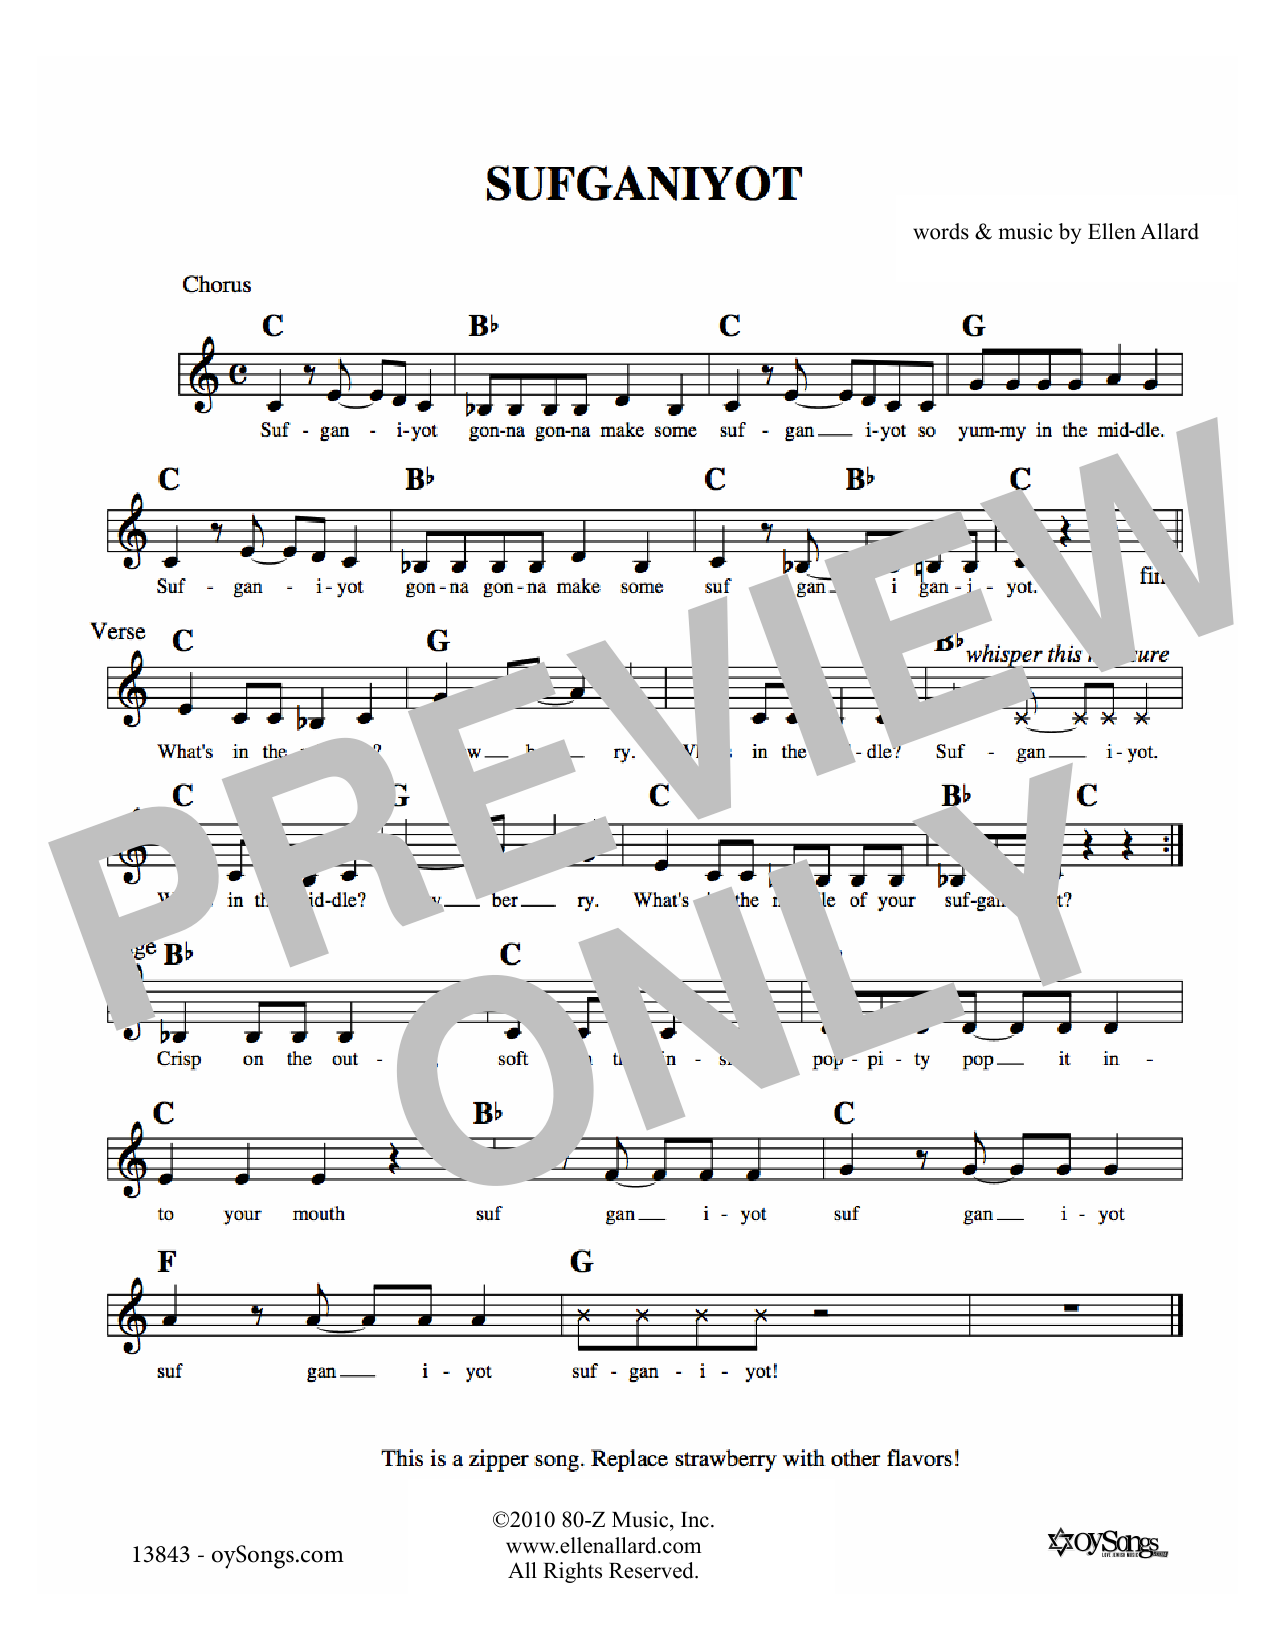 Download Ellen Allard Sufganiyot Sheet Music and learn how to play Melody Line, Lyrics & Chords PDF digital score in minutes